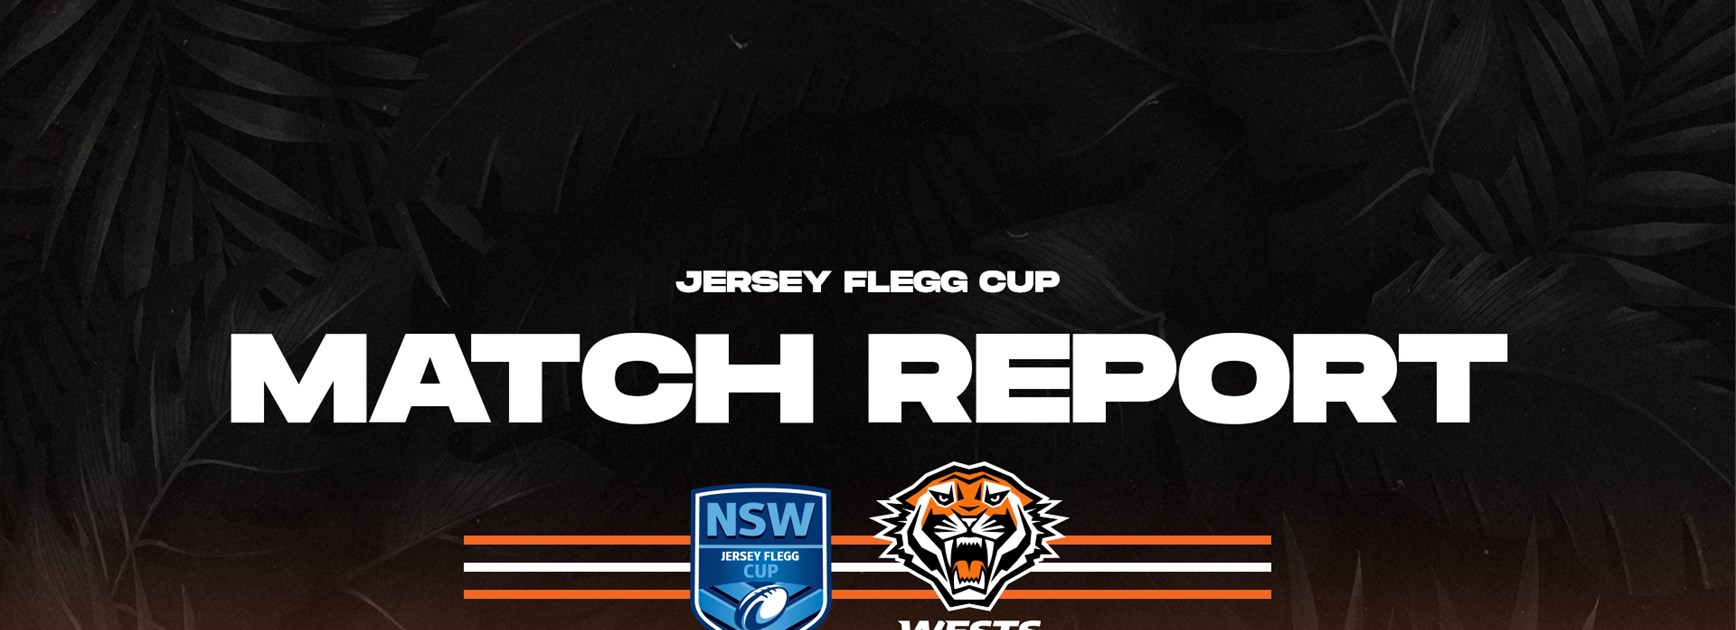 Match Report: Jersey Flegg Cup Round 24 vs